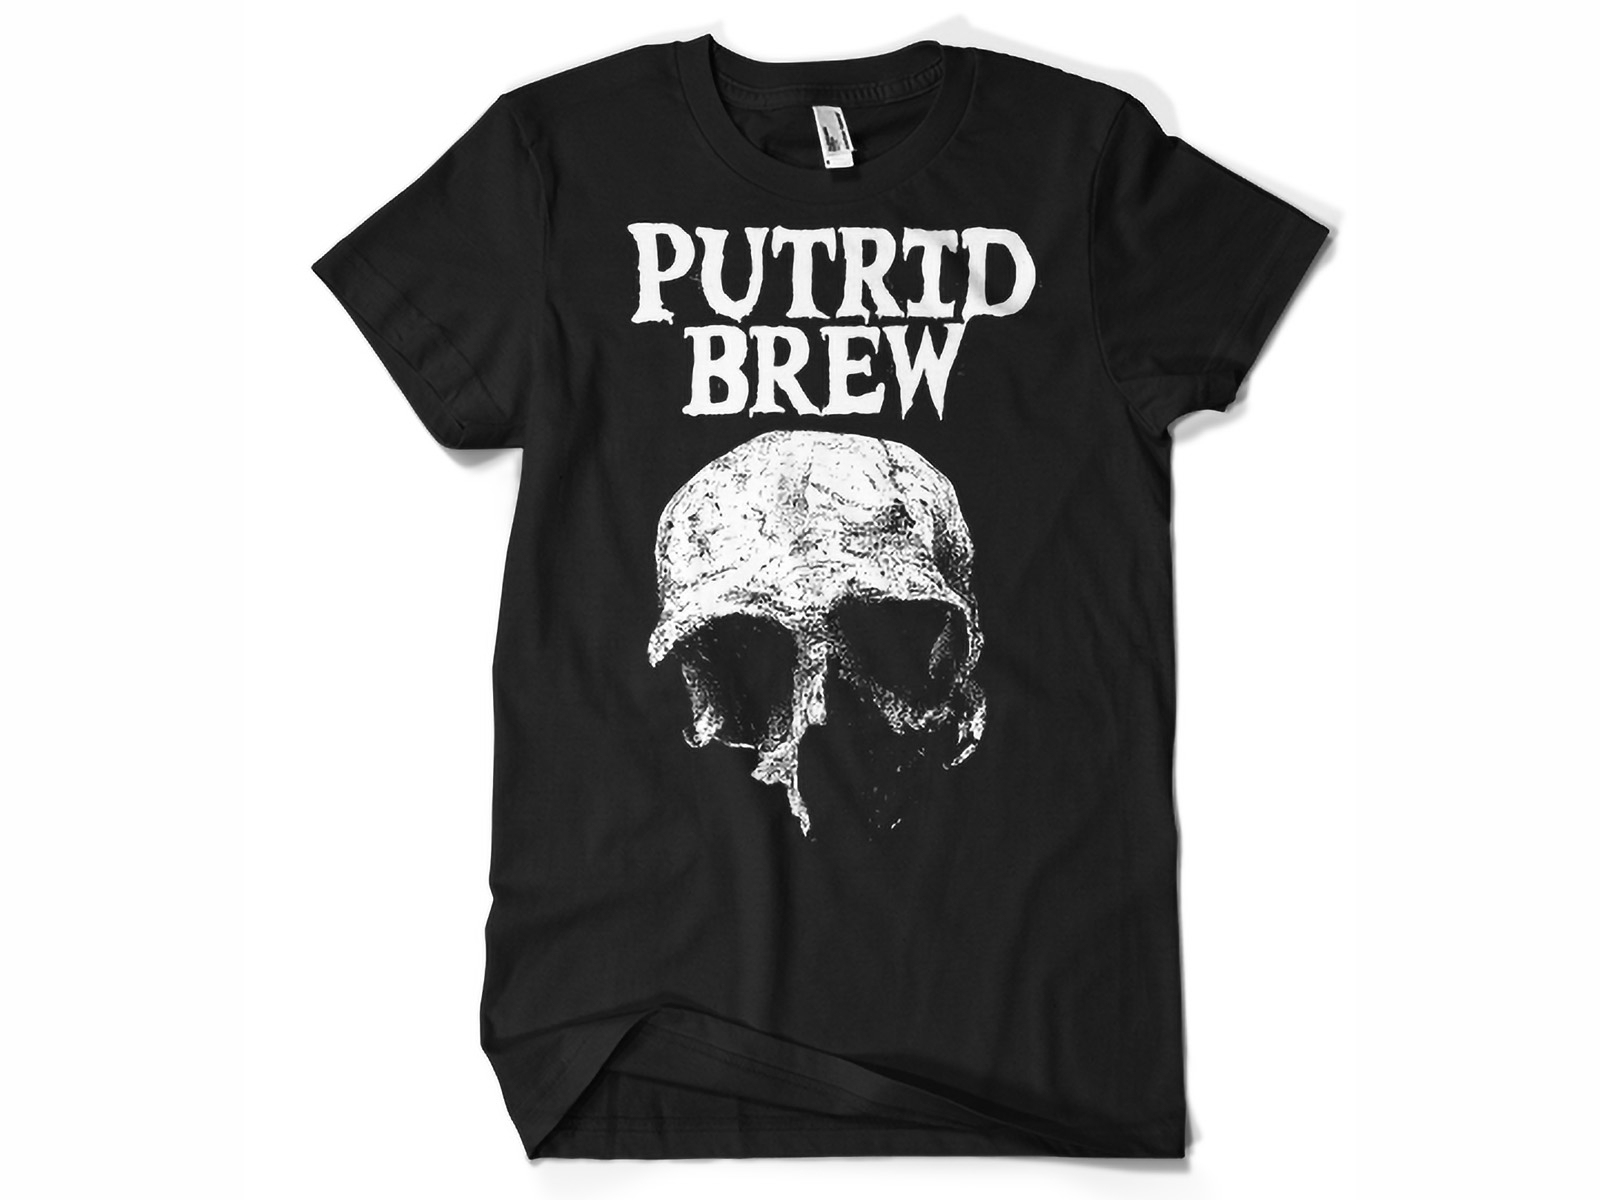 Putrid Brew Shirt Mockup designed by Steve Kwasniewski. 